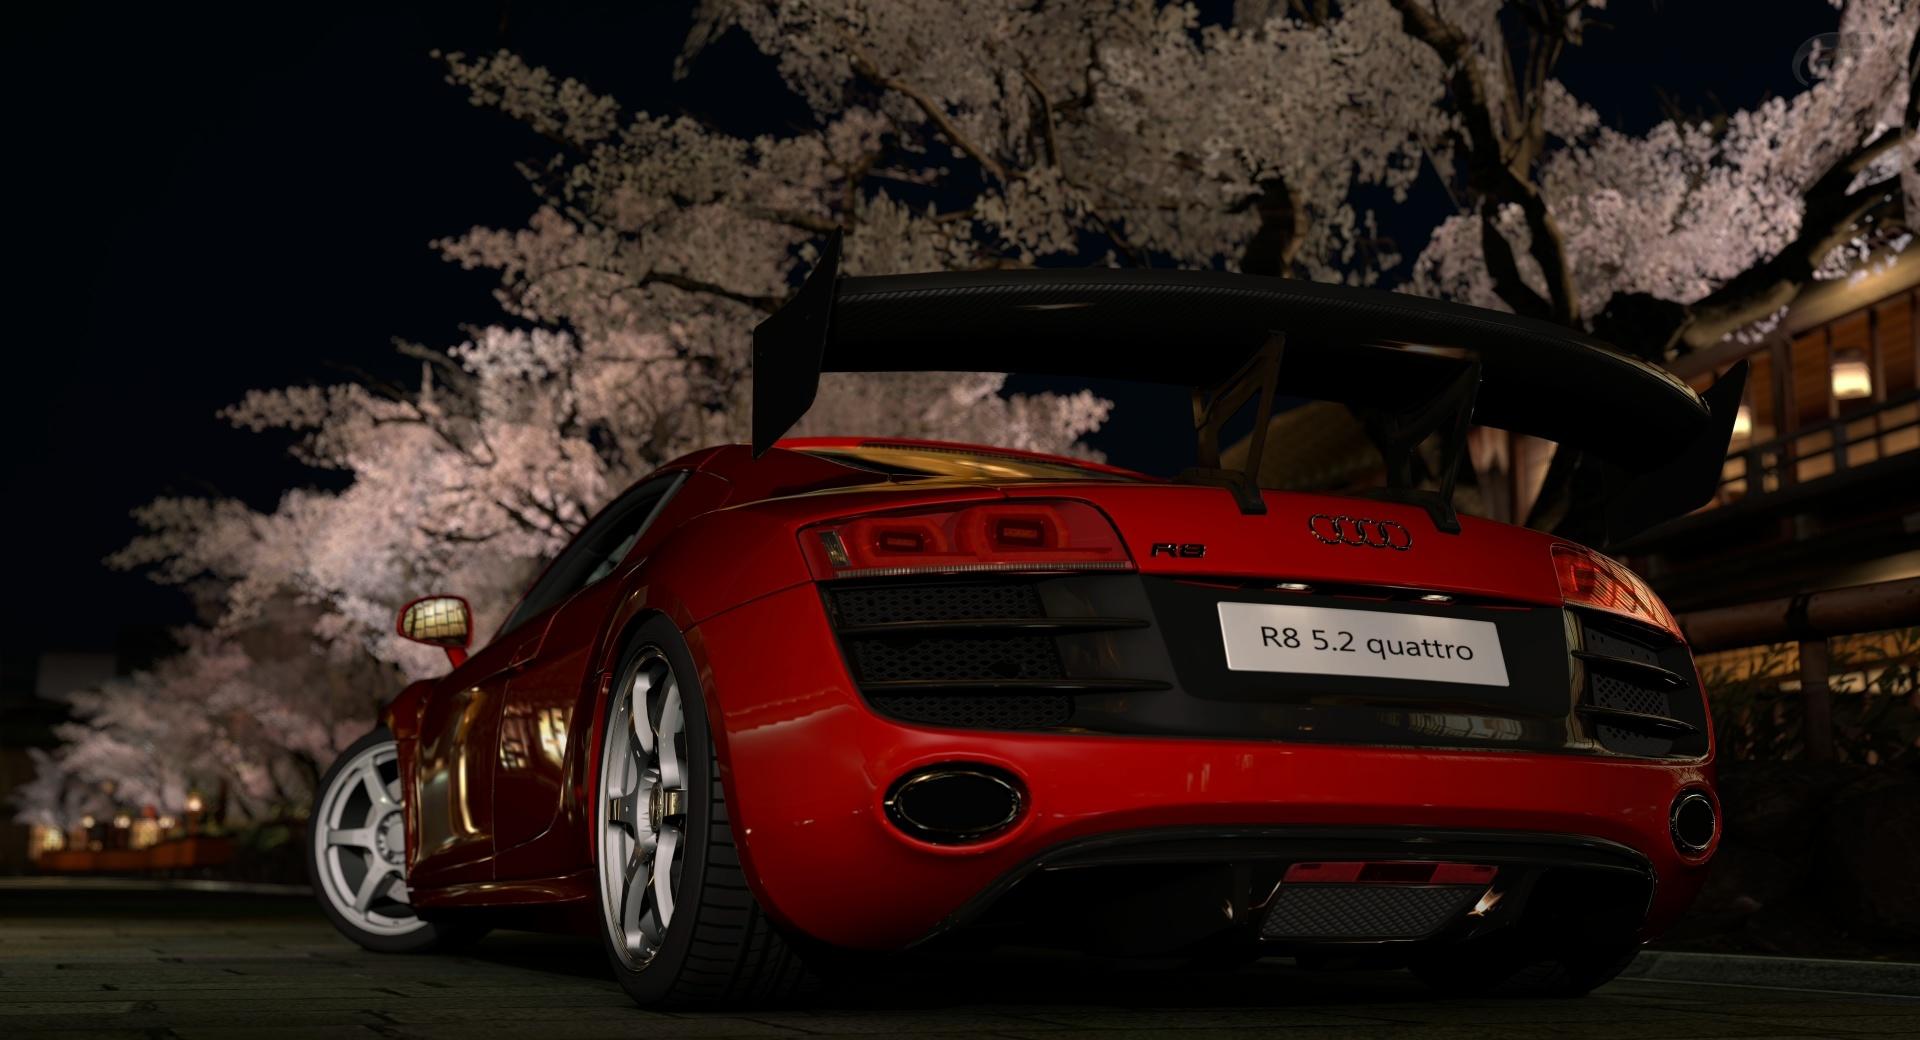 Gran Turismo 5 Audi R8 5 2 Quattro at 1024 x 1024 iPad size wallpapers HD quality